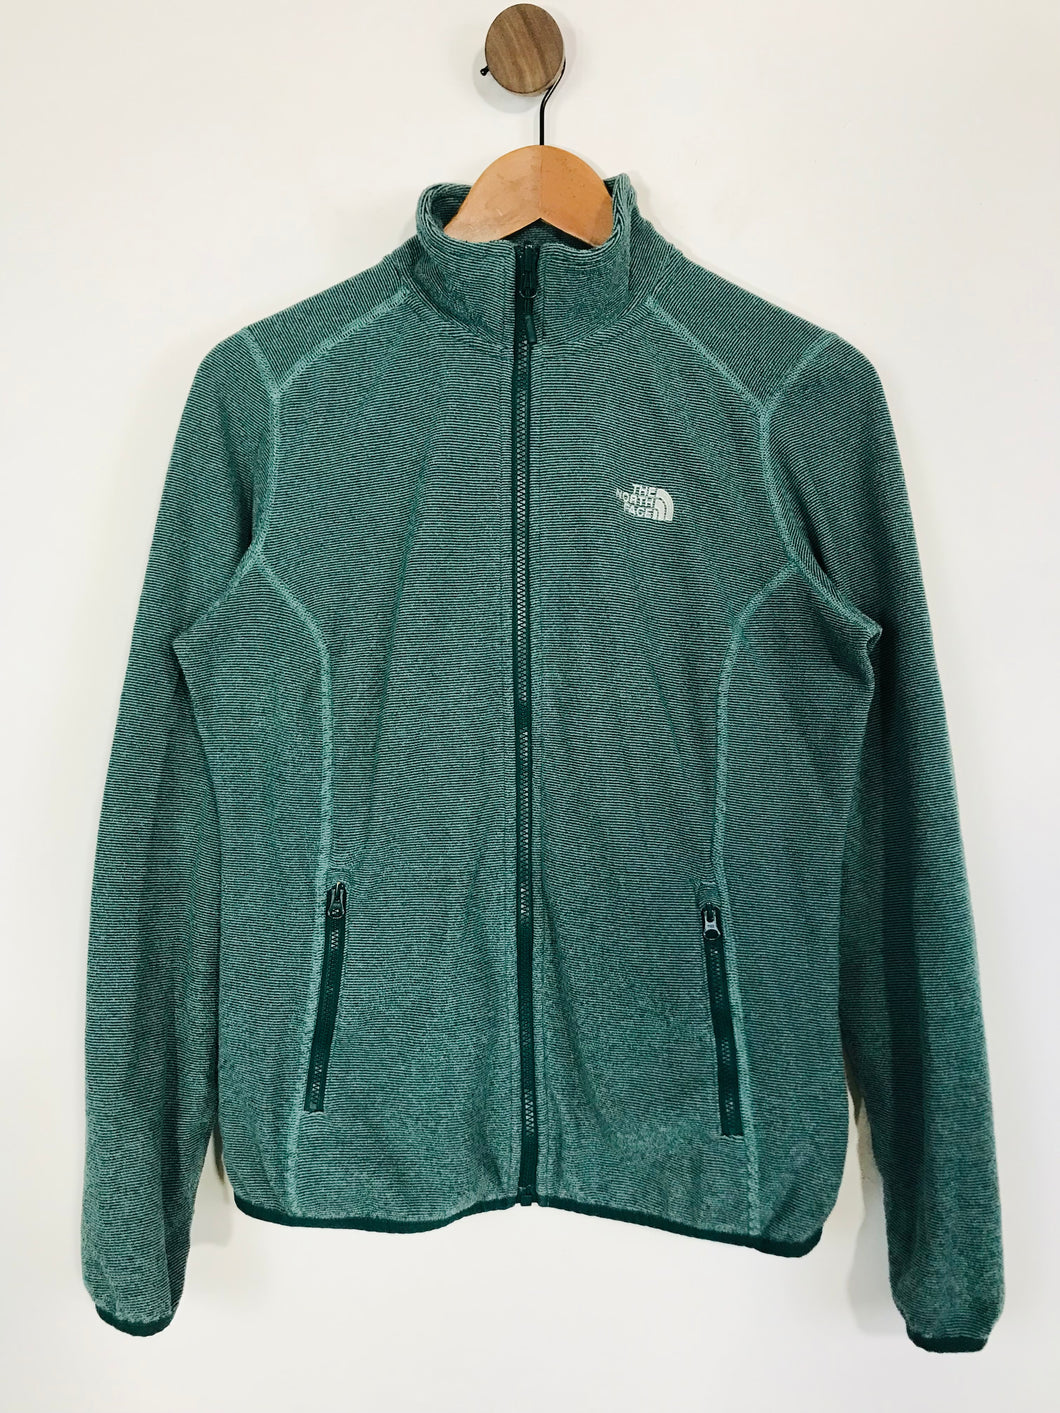 The North Face Women's Fleece Jacket | M UK10-12 | Green